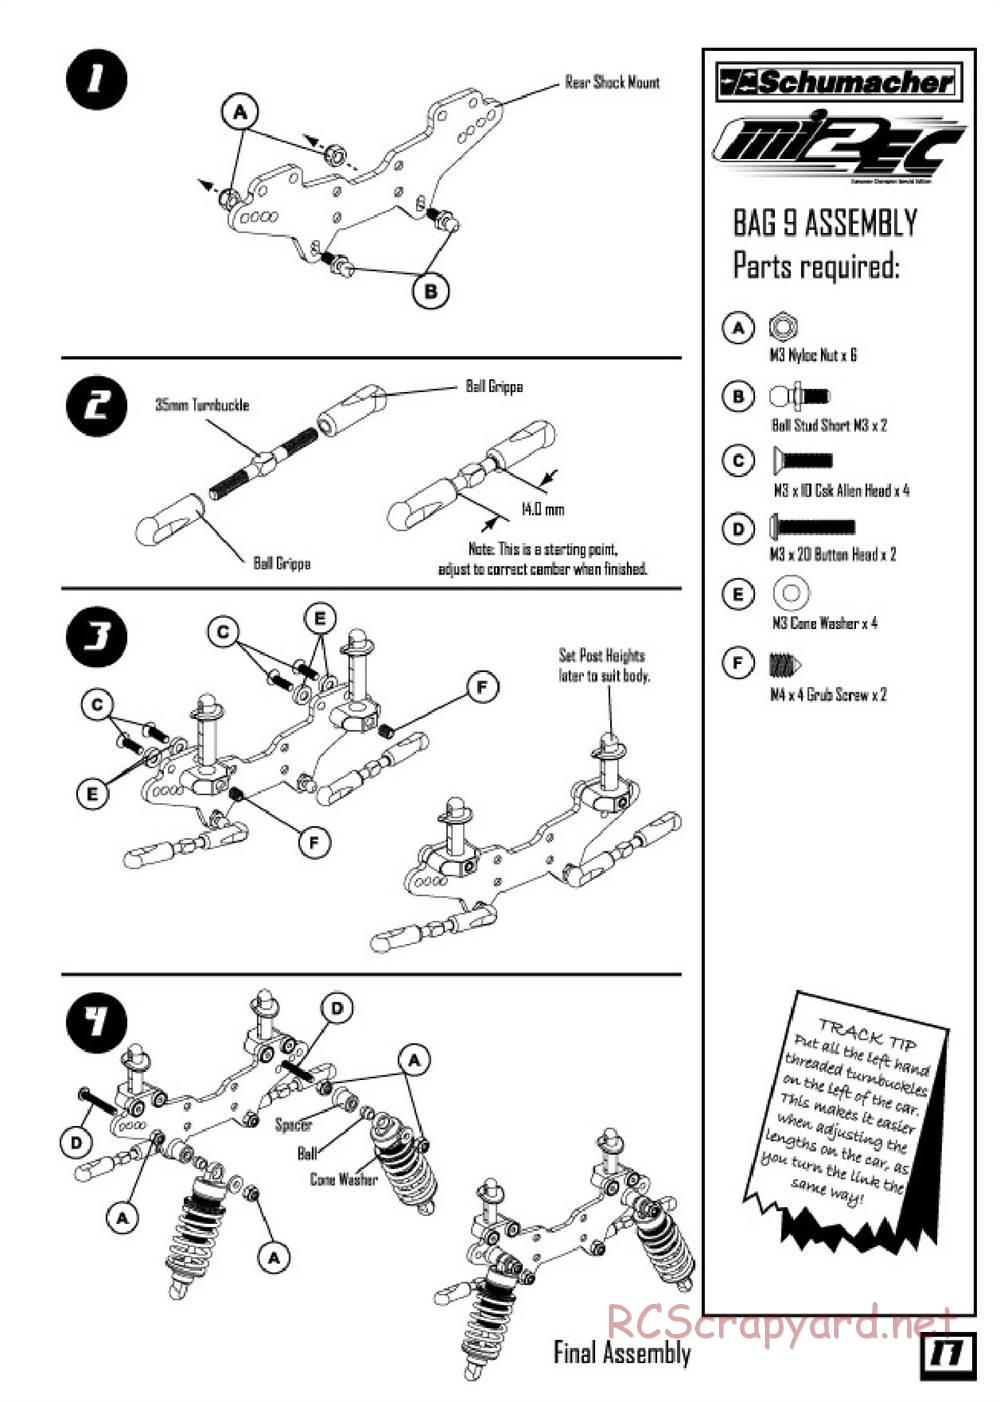 Schumacher - Mi2 EC - Manual - Page 19